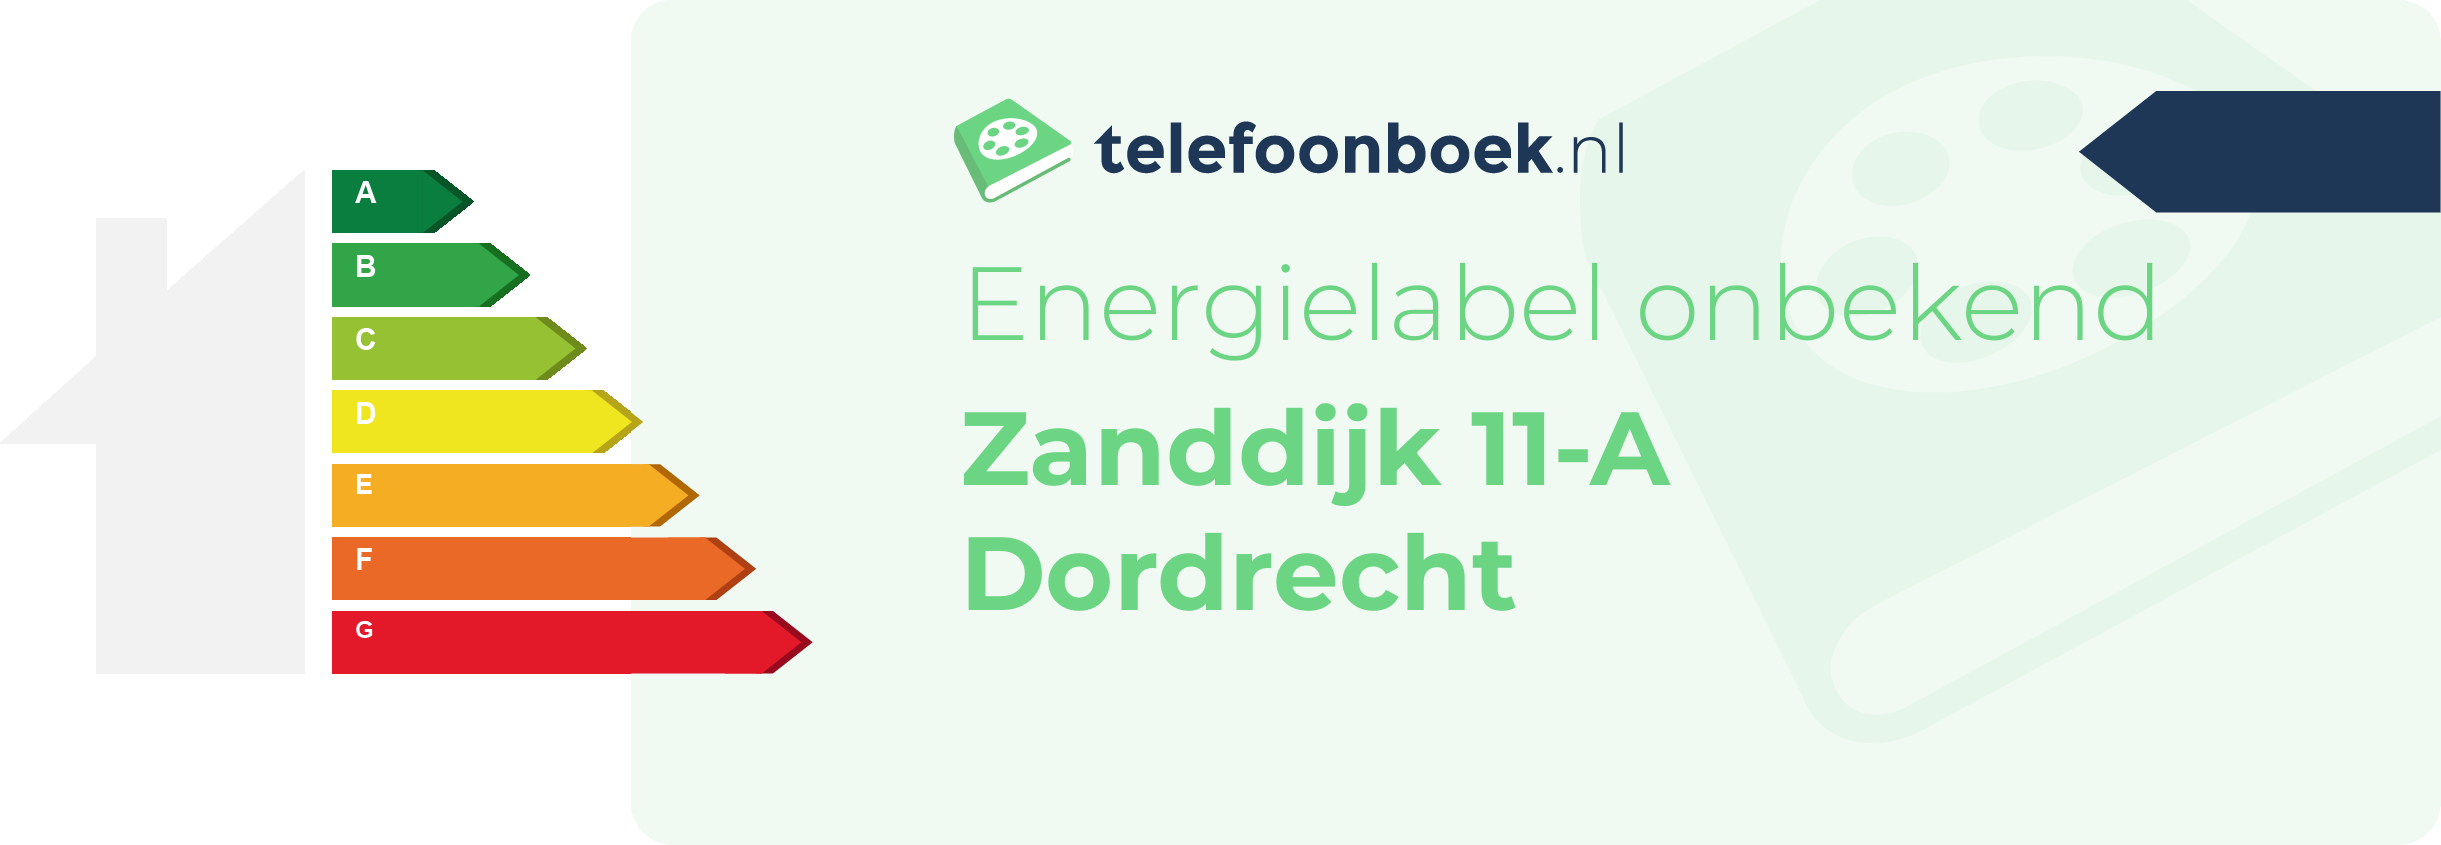 Energielabel Zanddijk 11-A Dordrecht